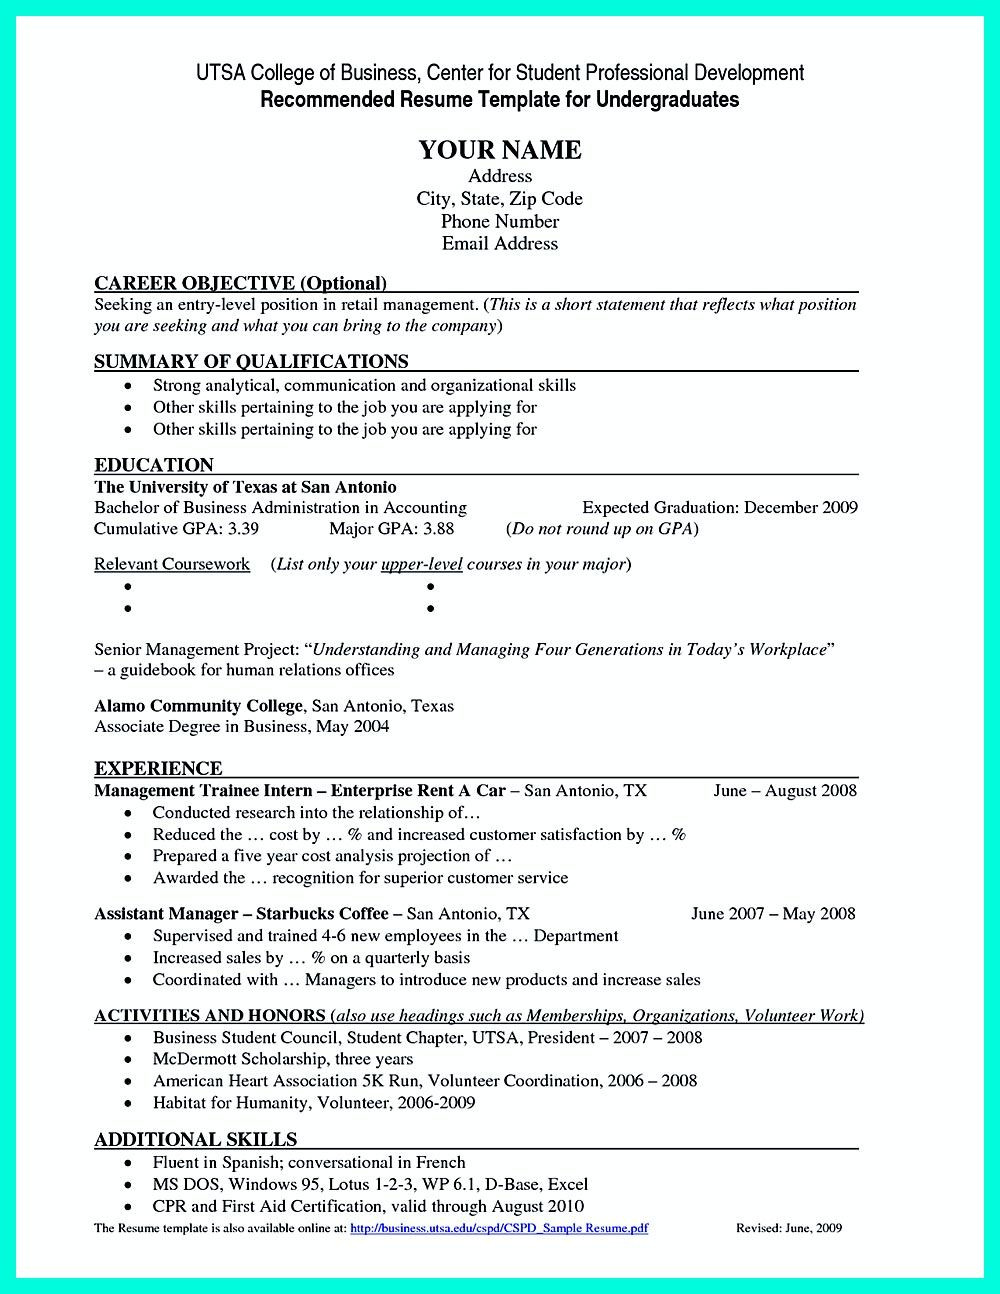 Sample Resume Profile for College Student Best Current College Student Resume with No Experience Job …